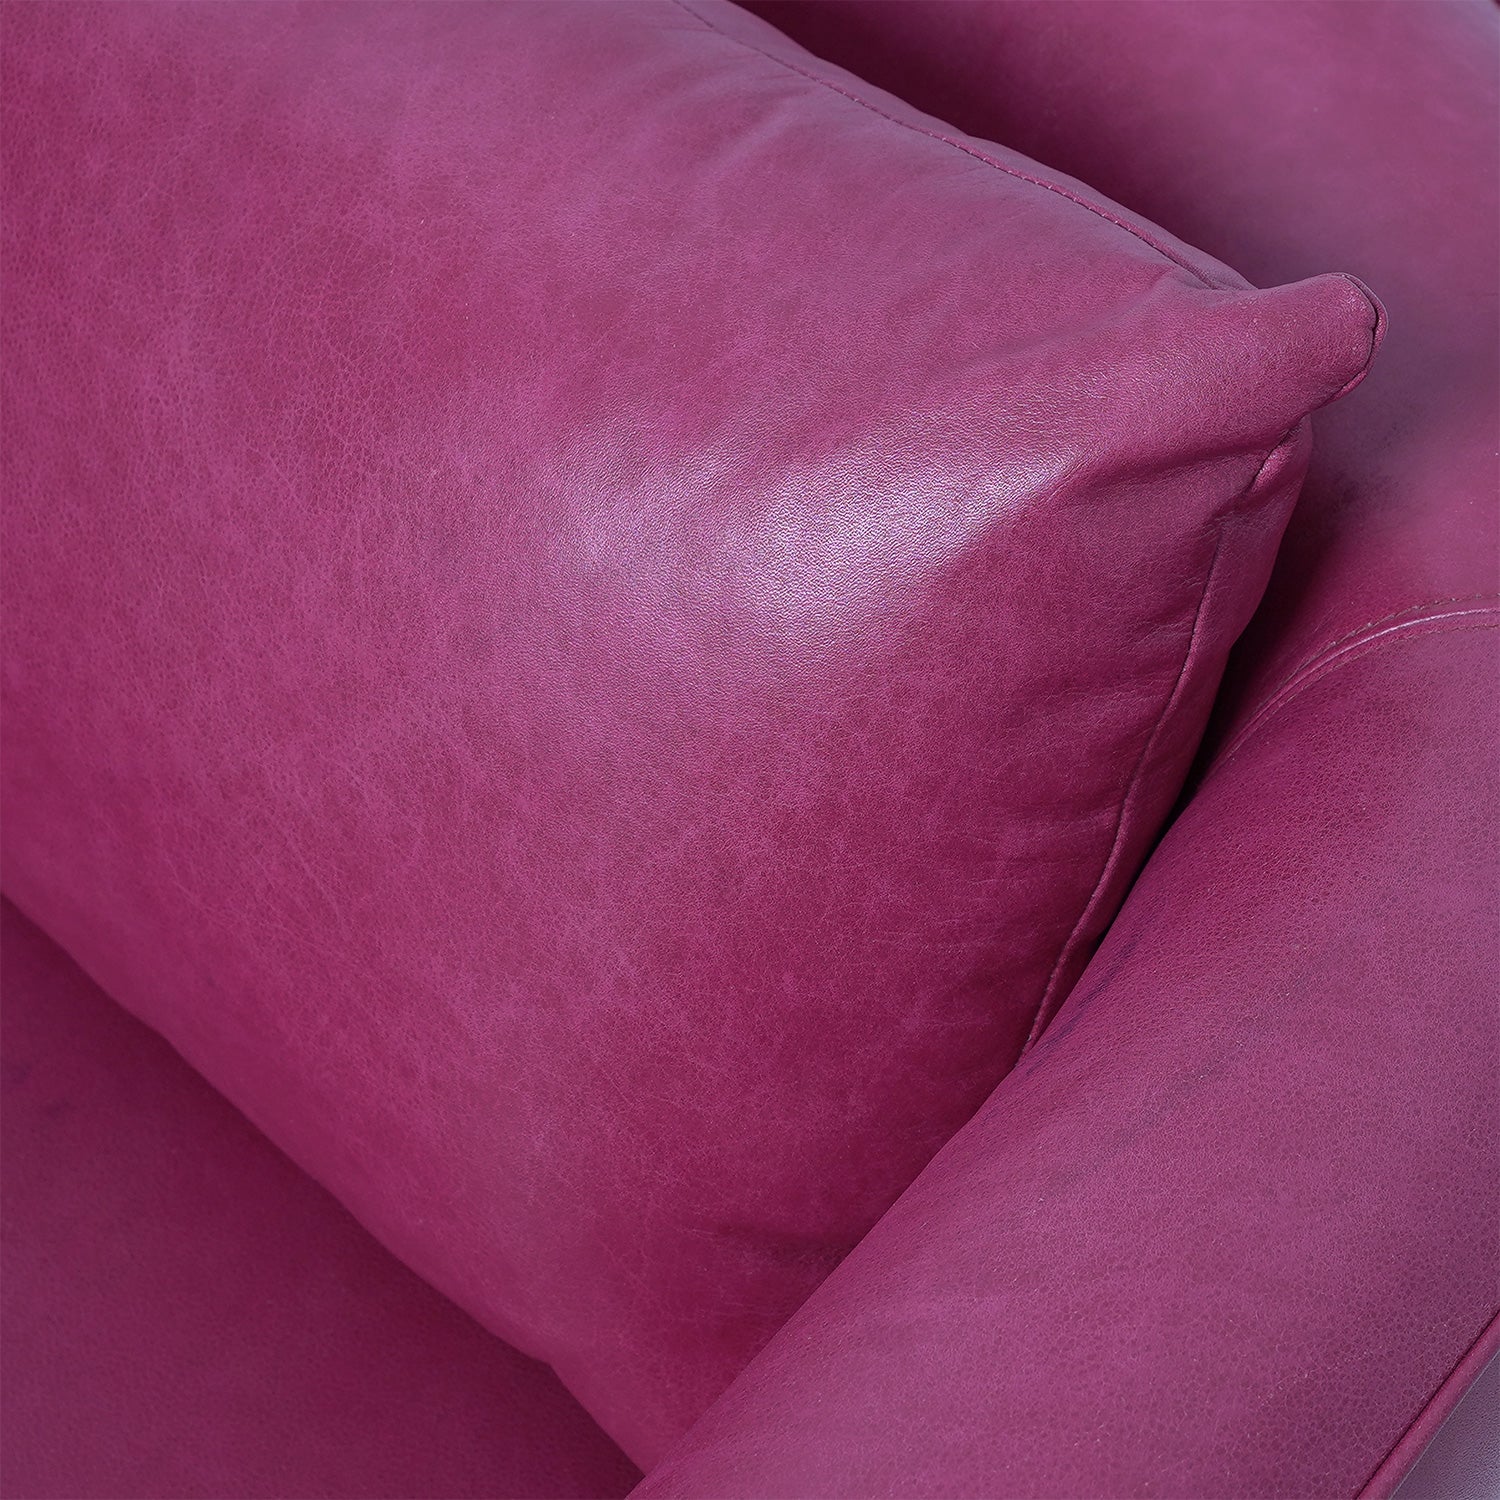 Byrne Ara Antigo Leather Chair Garnet Close Up Back Cushion